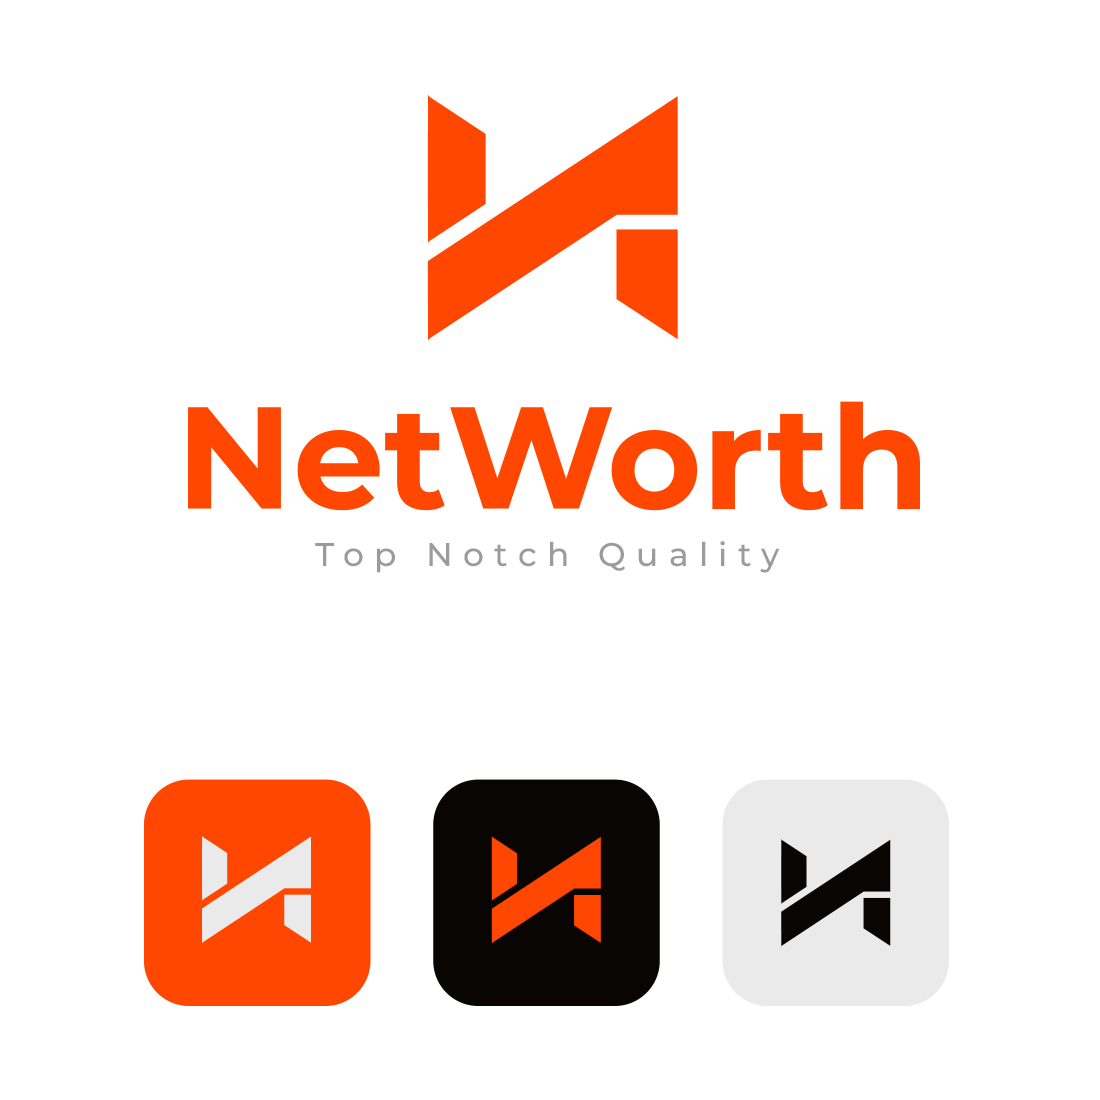 Networth logo Design template - Editable cover image.